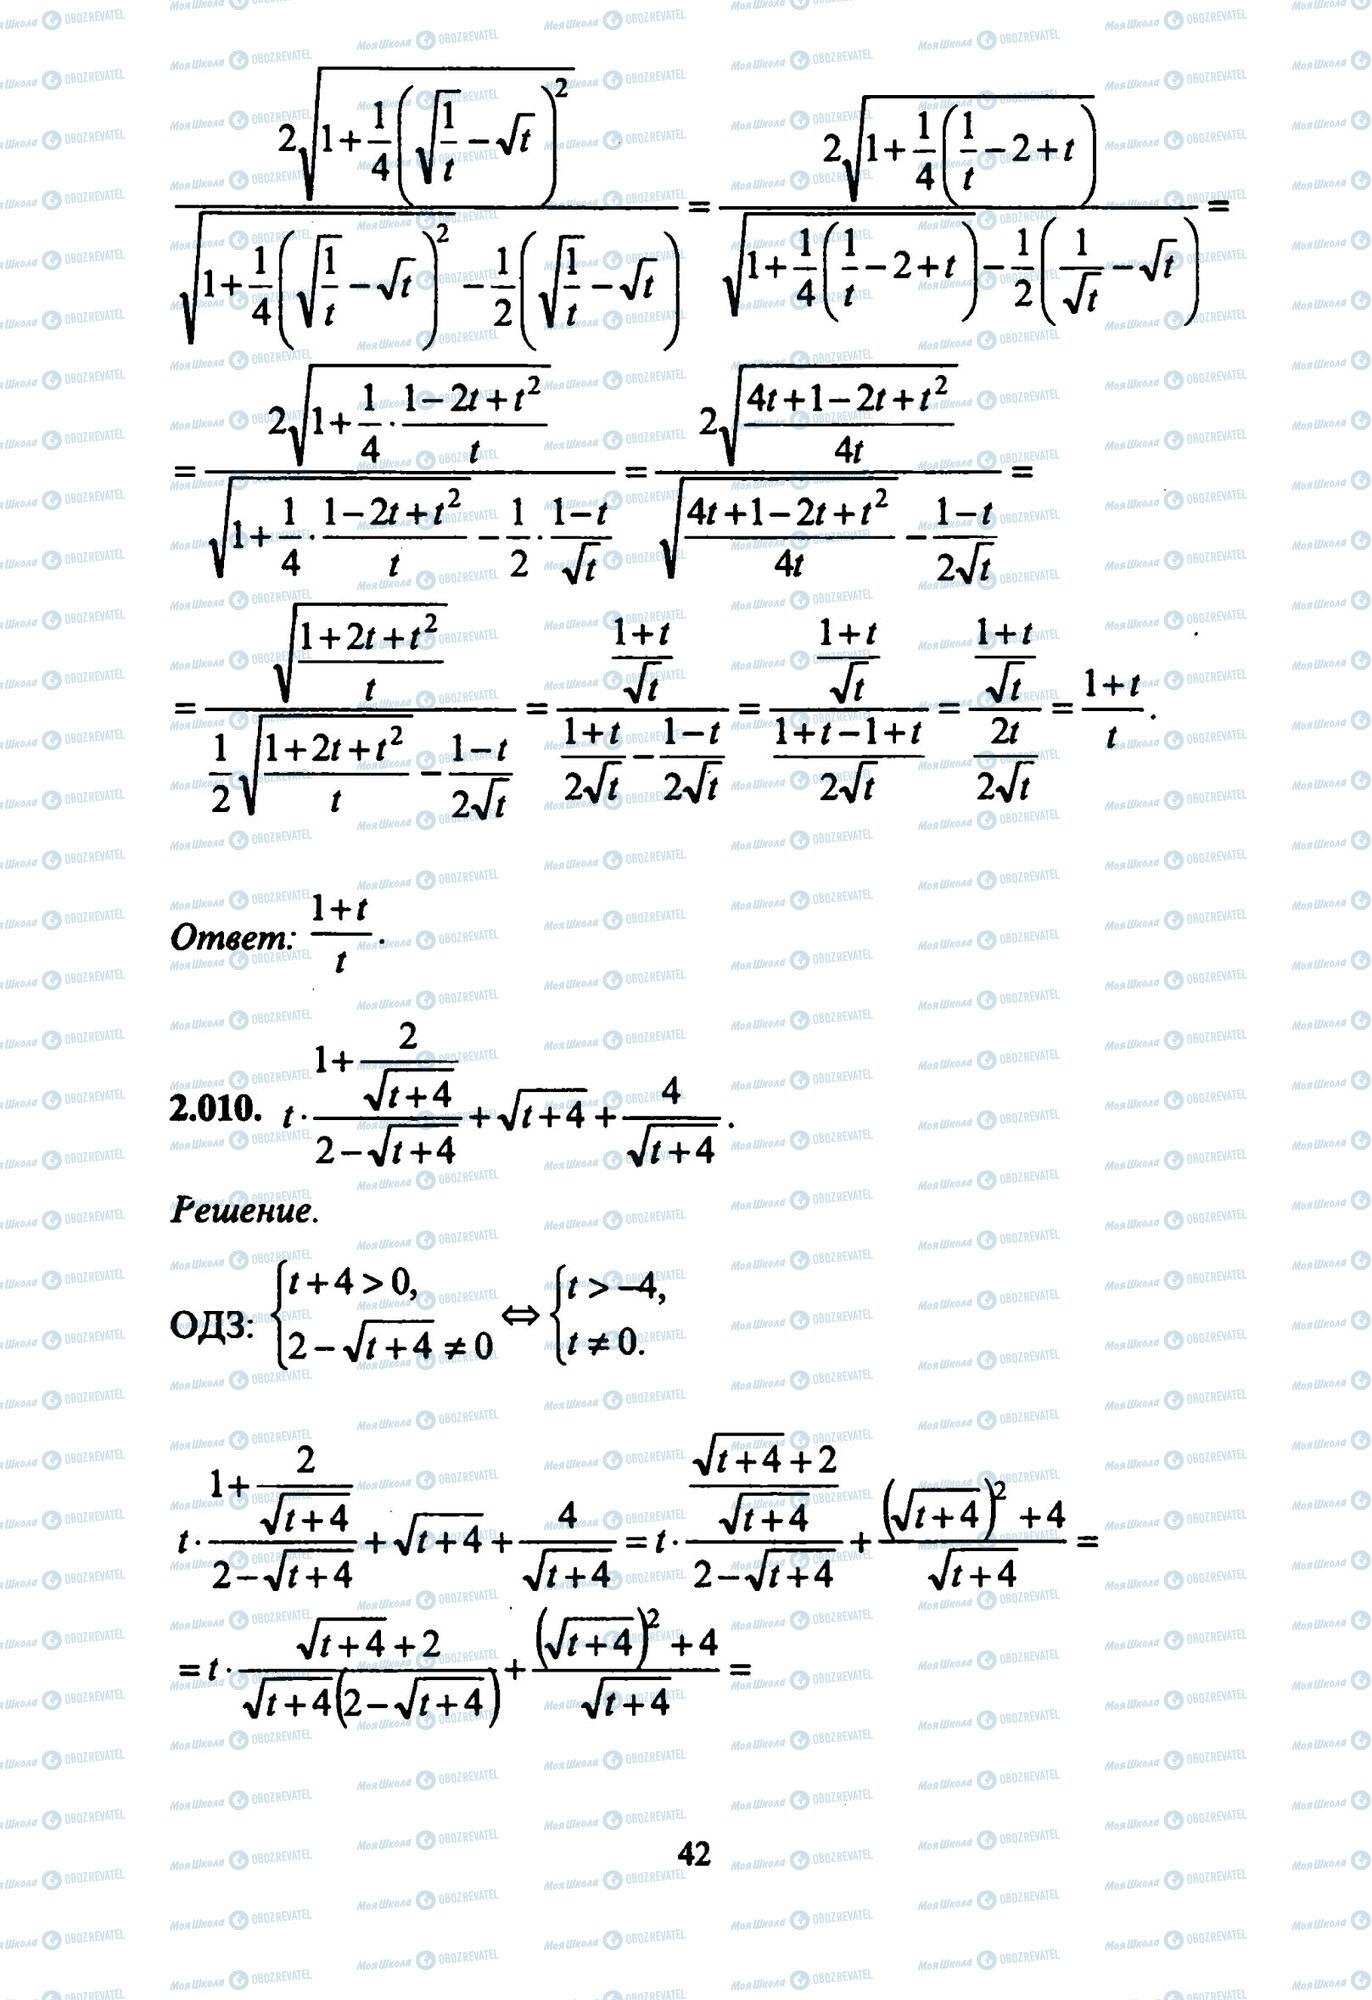 ЗНО Математика 11 класс страница 10